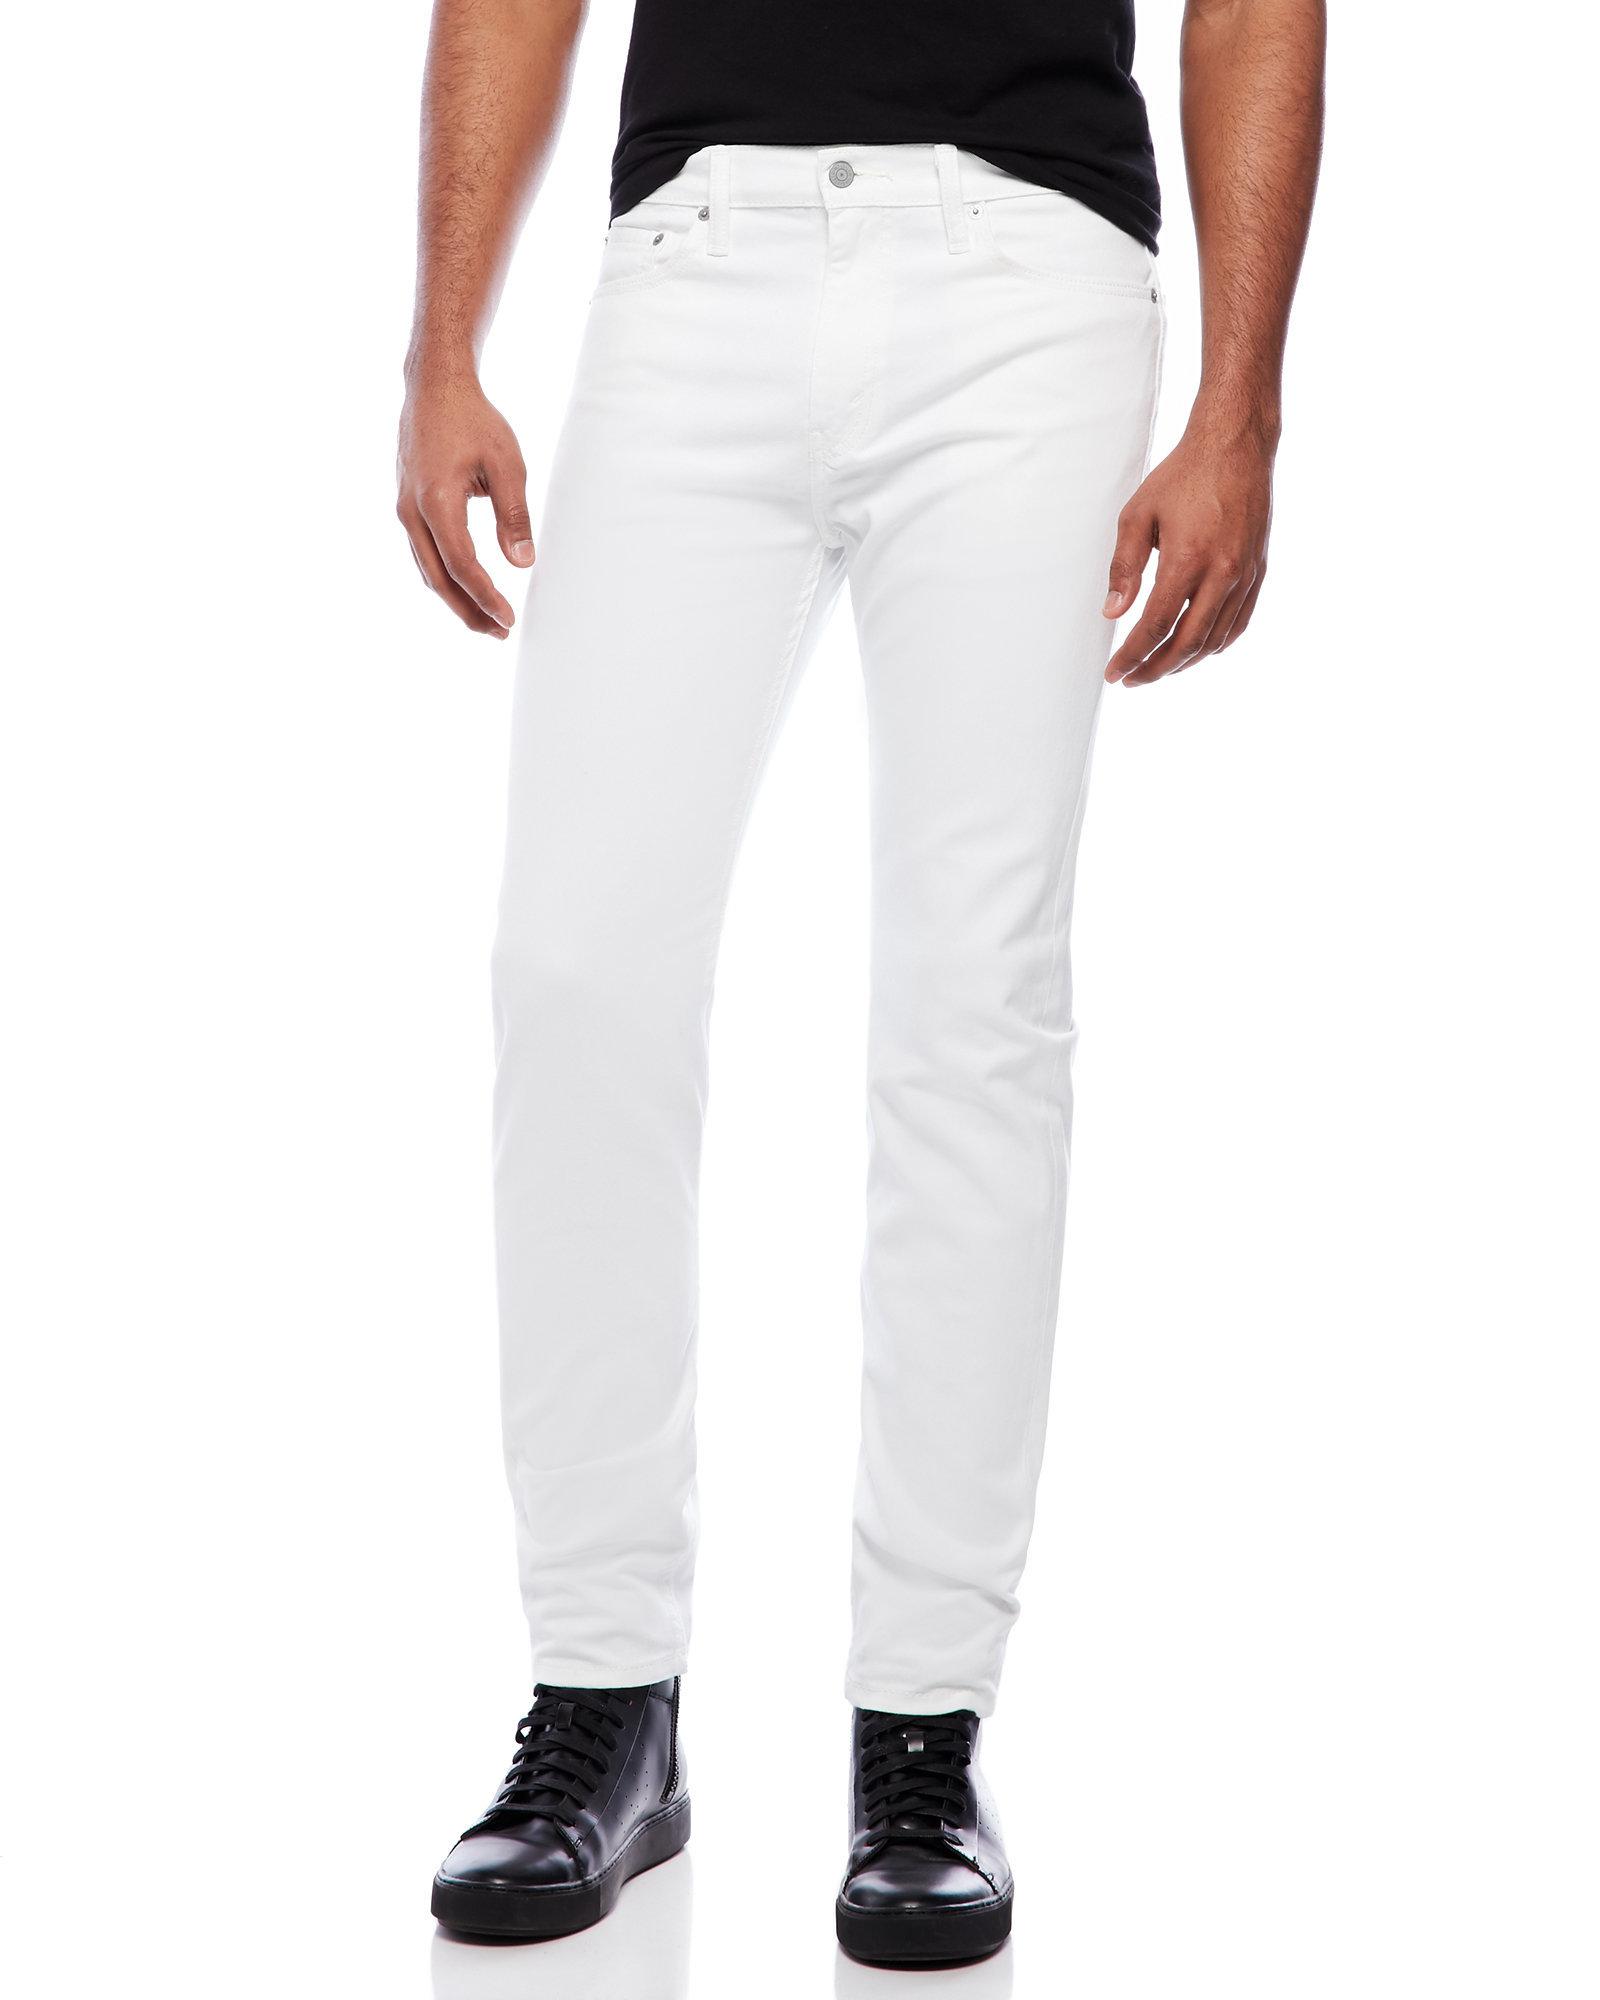 Lyst - Levi'S Skinny Jeans in White for Men